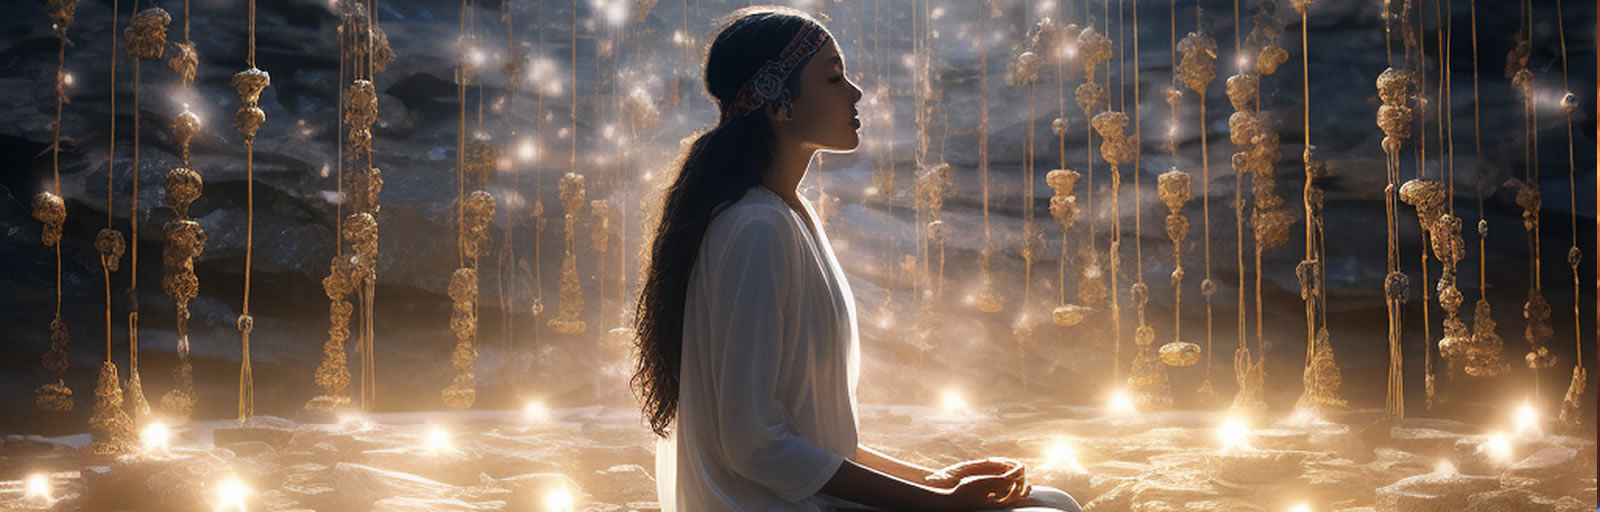 Healing Light, Channeling Psychic Guidance Through Meditation, Main image